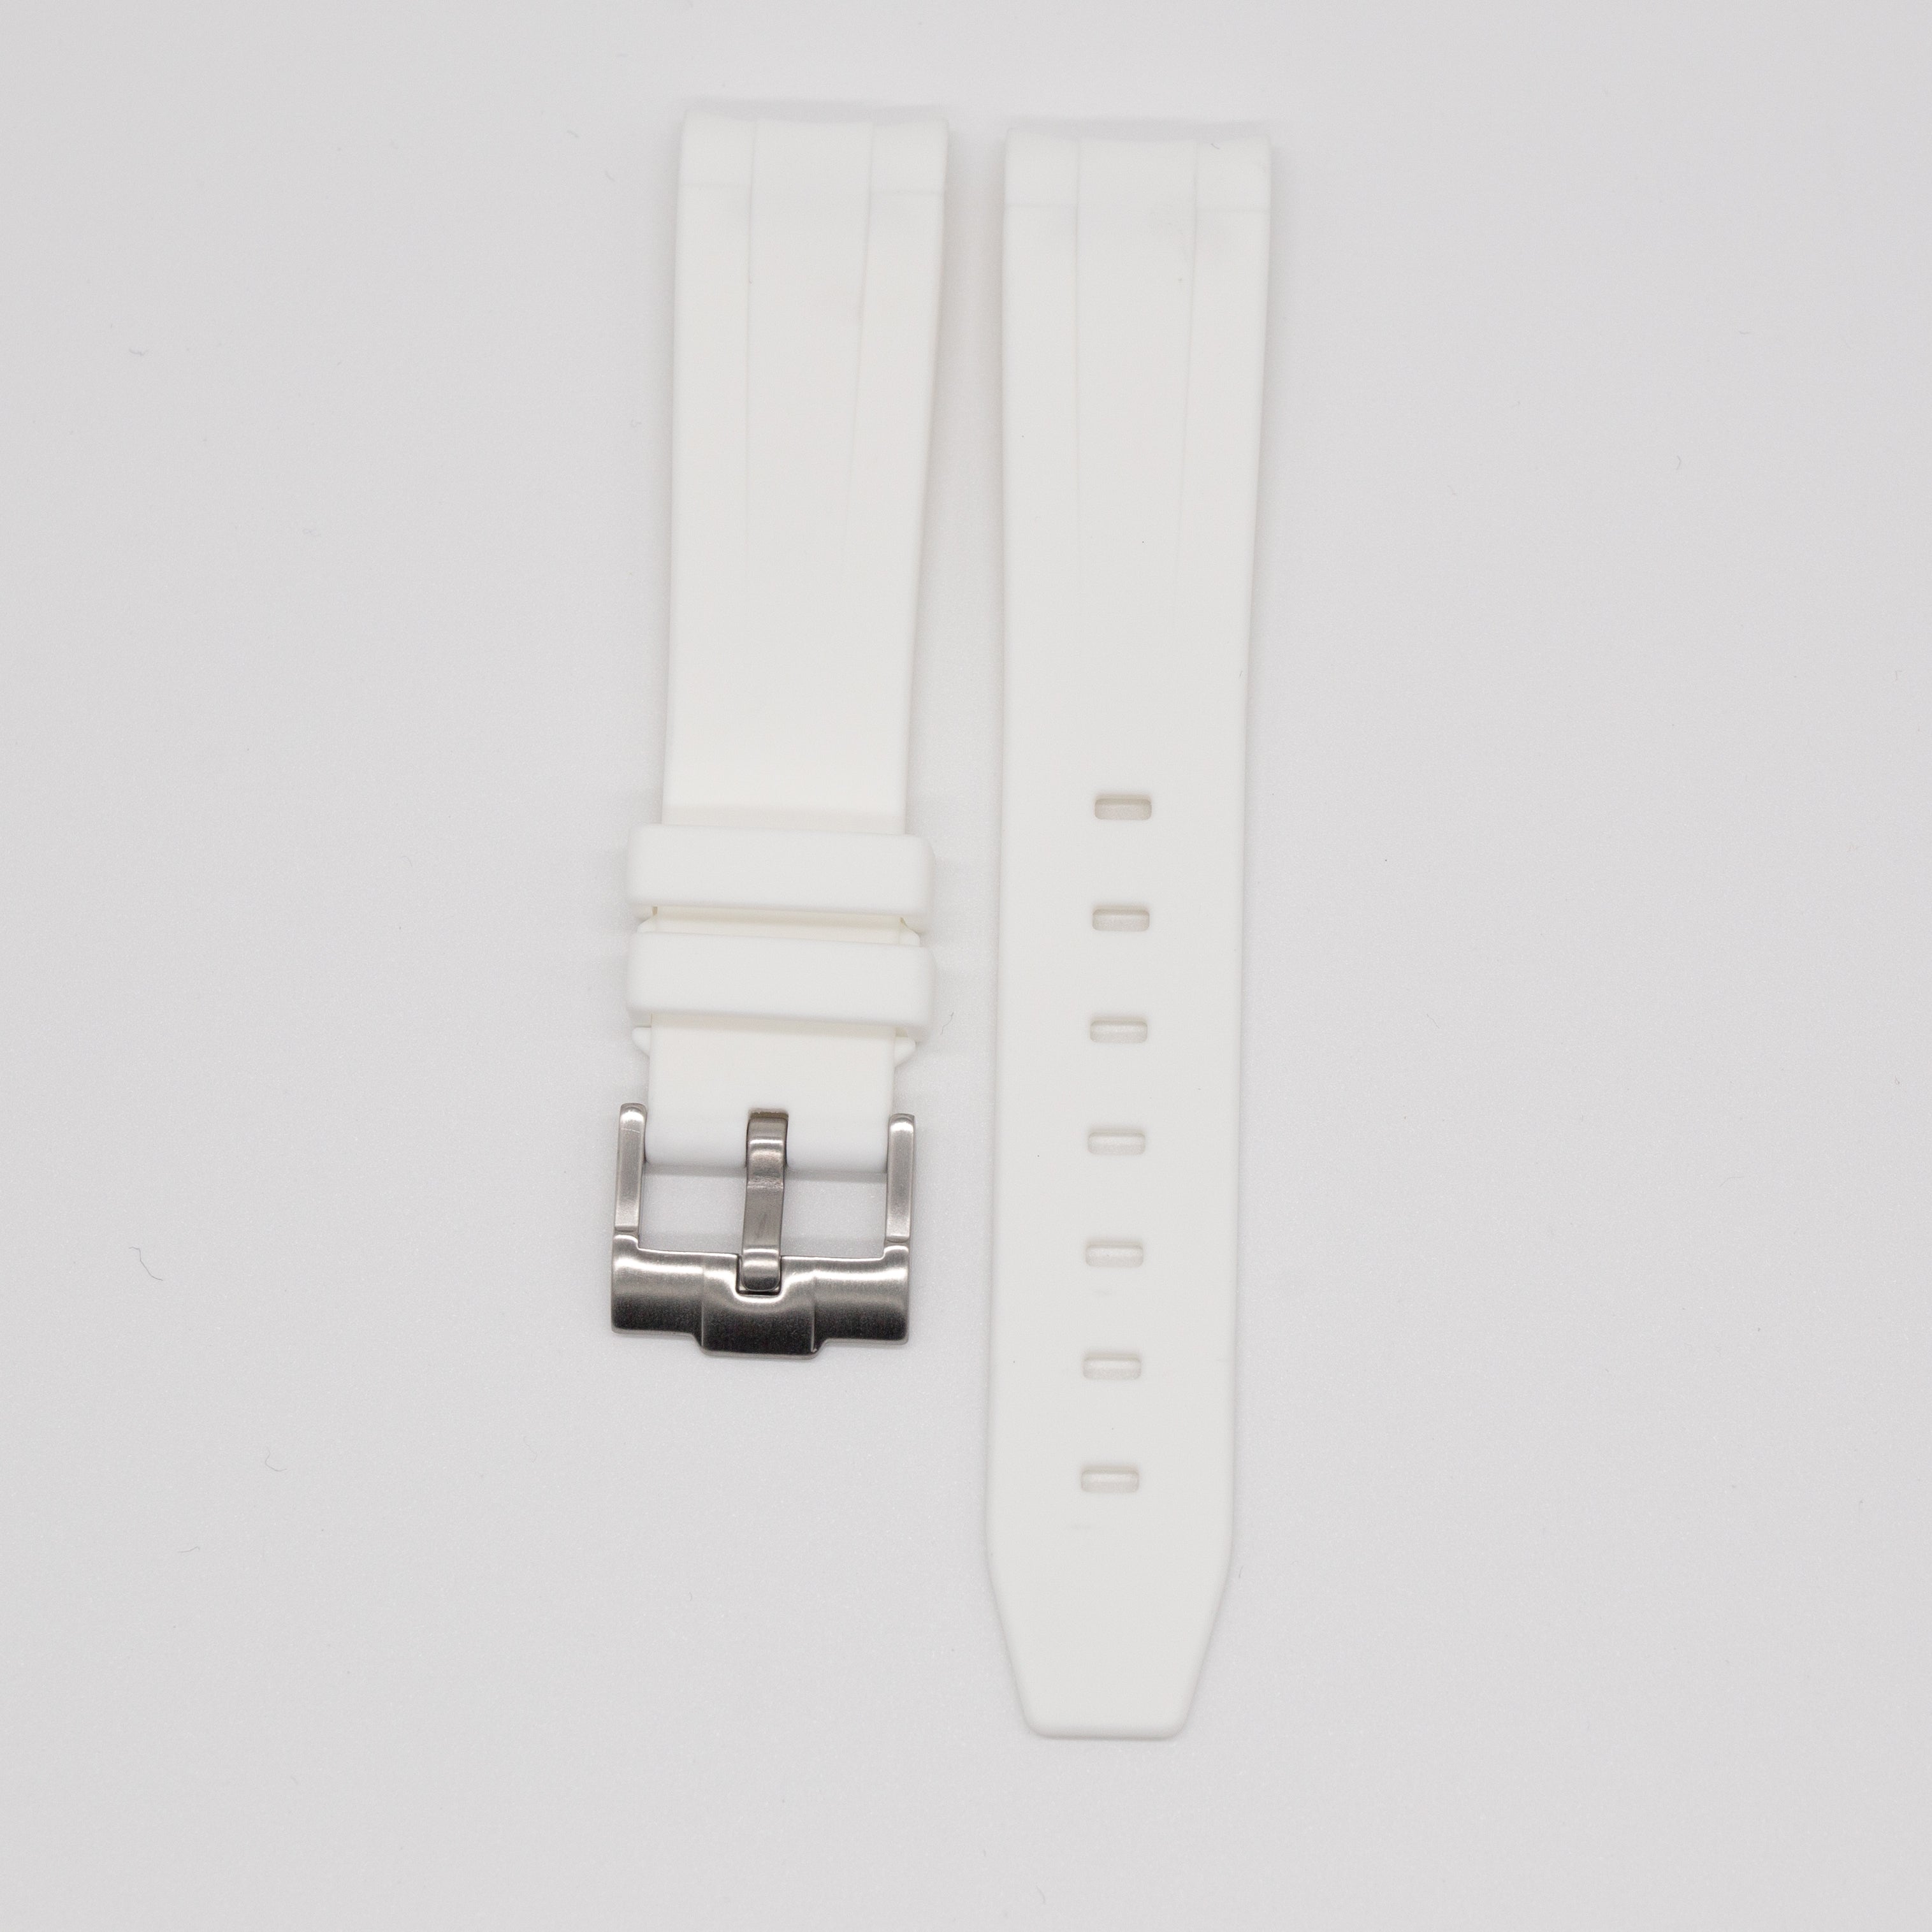 MoonSwatch Sleak Luxury Strap White